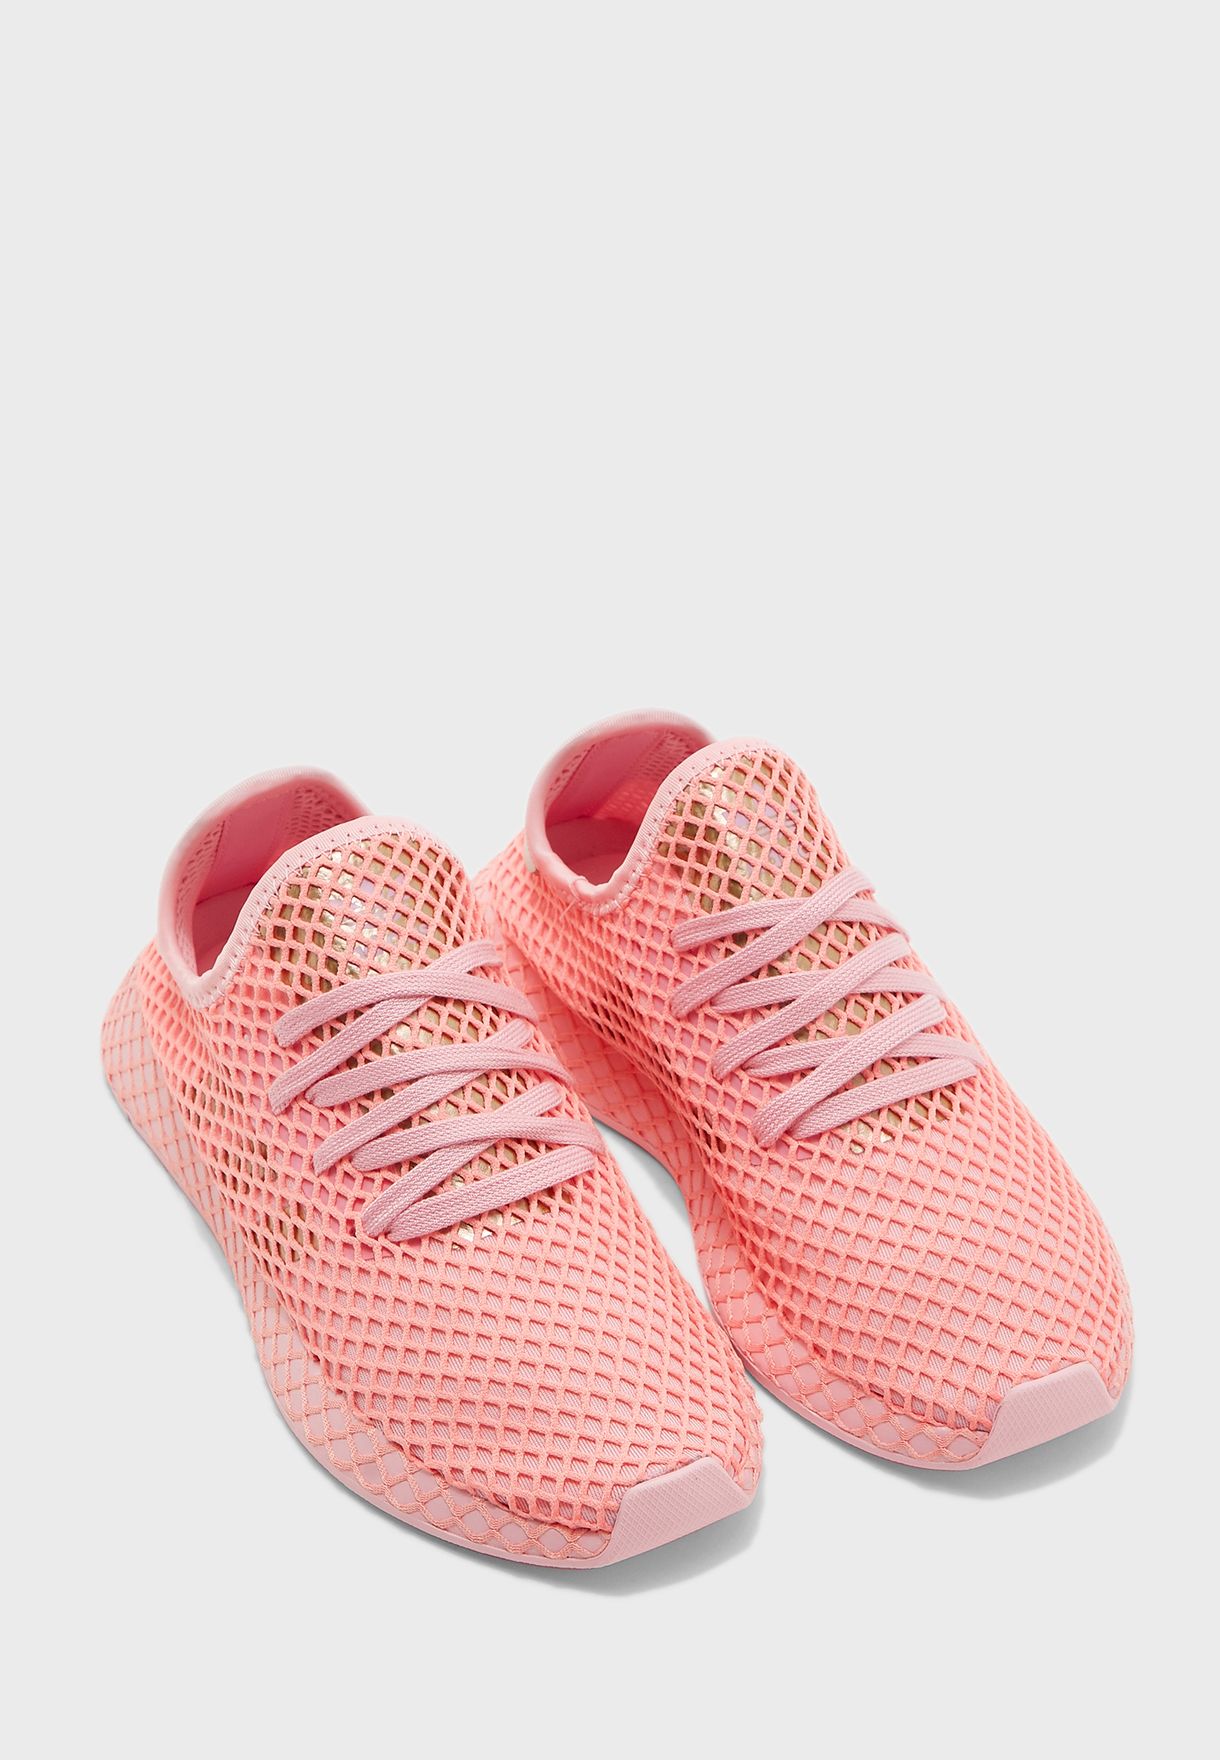 adidas deerupt runner pink